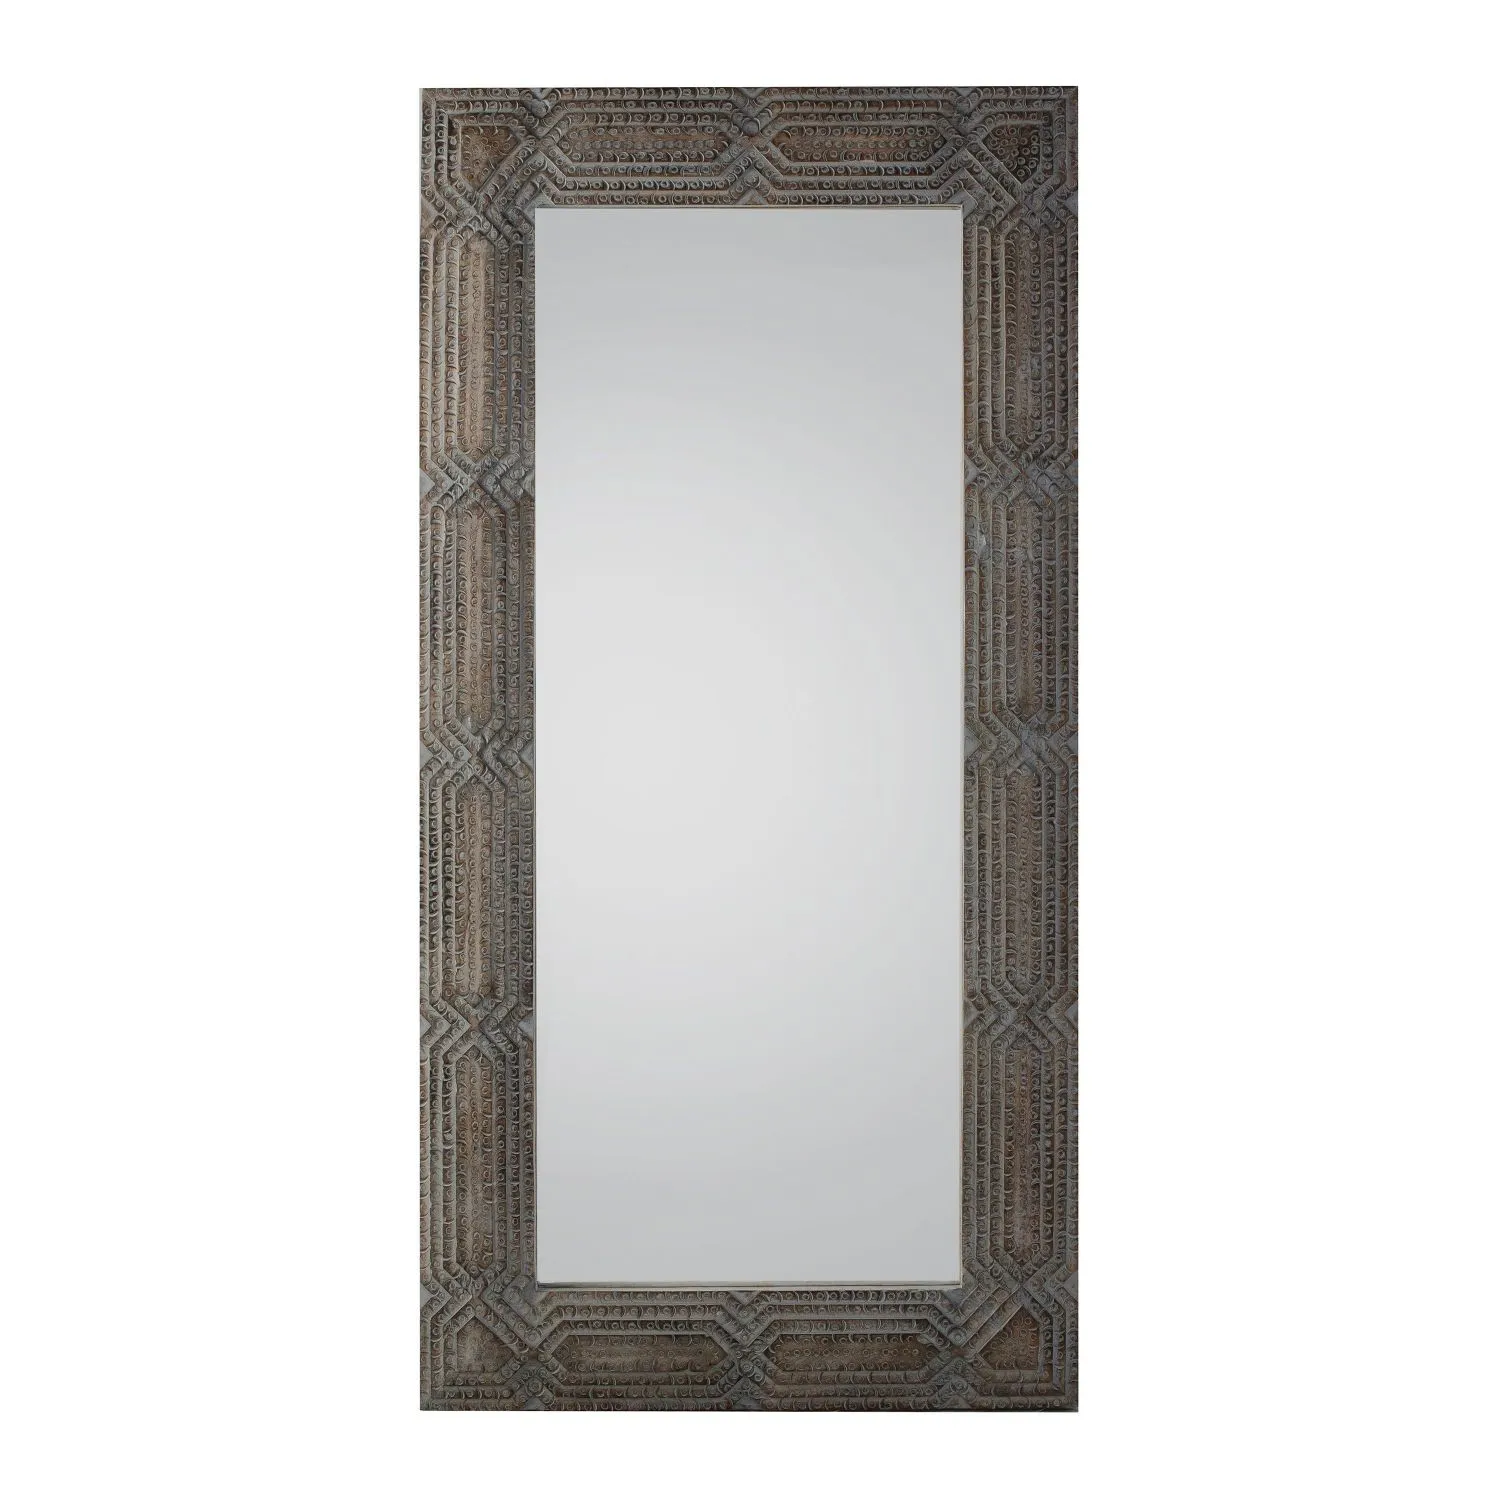 Decorative Wooden Framed Rectangular Leaner Mirror